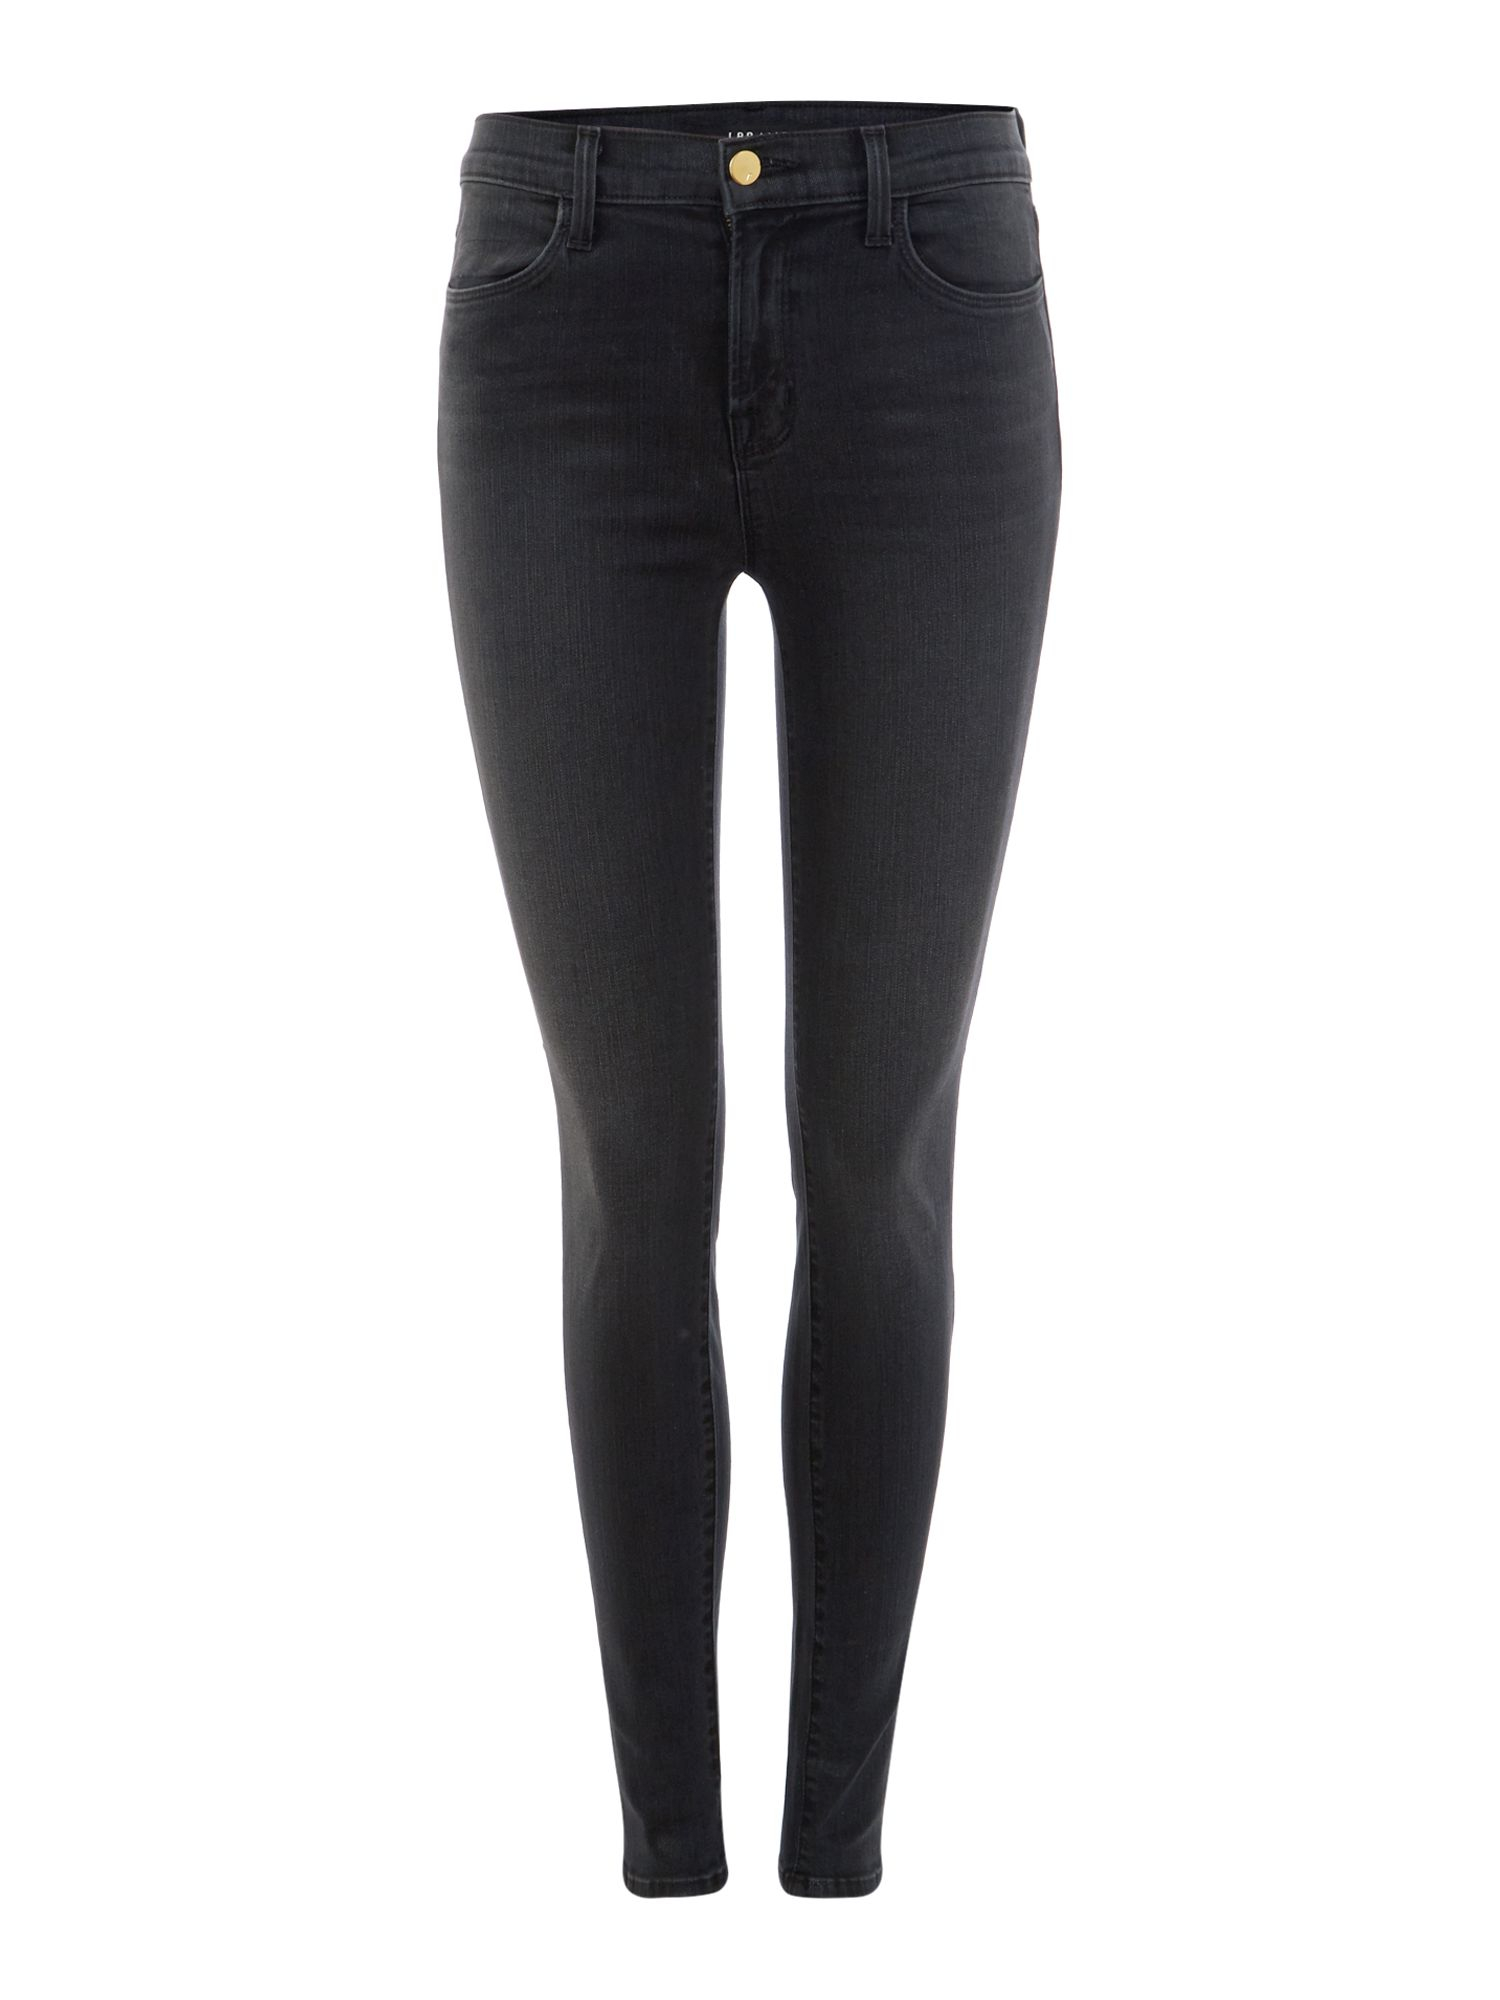 J brand Maria High Rise Skinny Jeans In Black Diamond in Black | Lyst